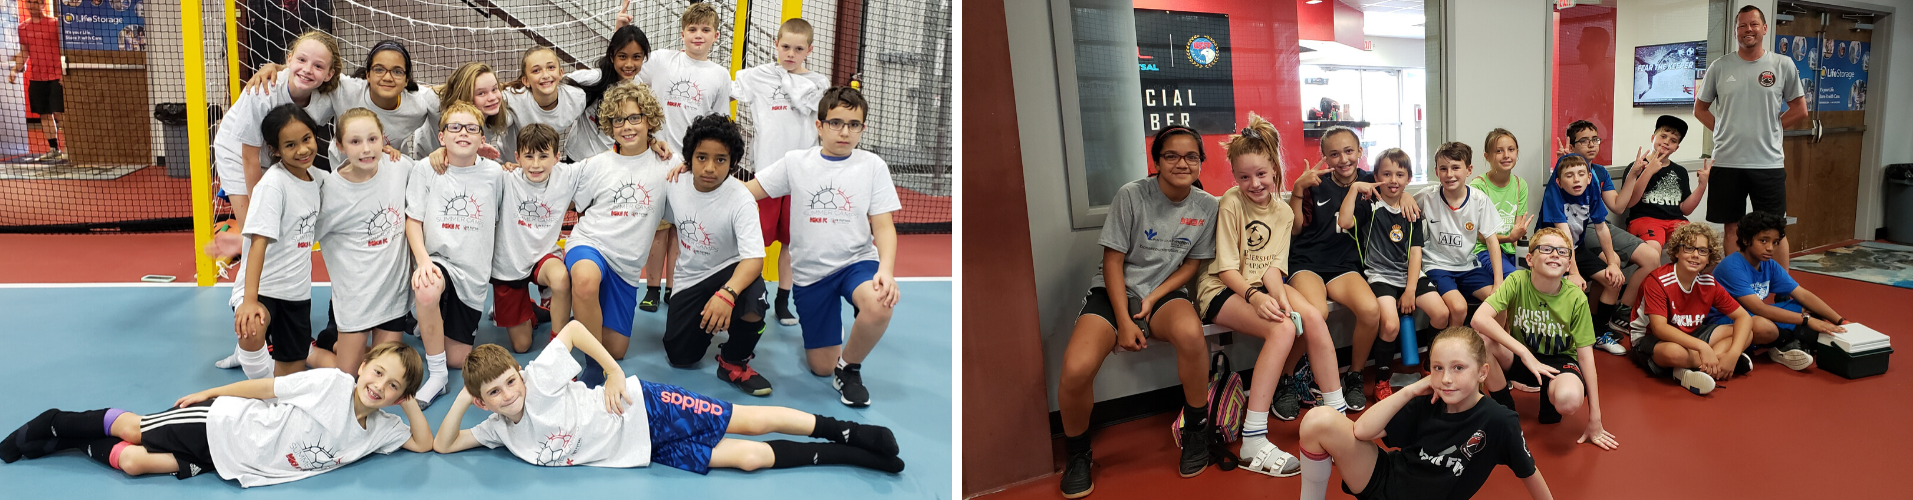 Futsal Day Camp